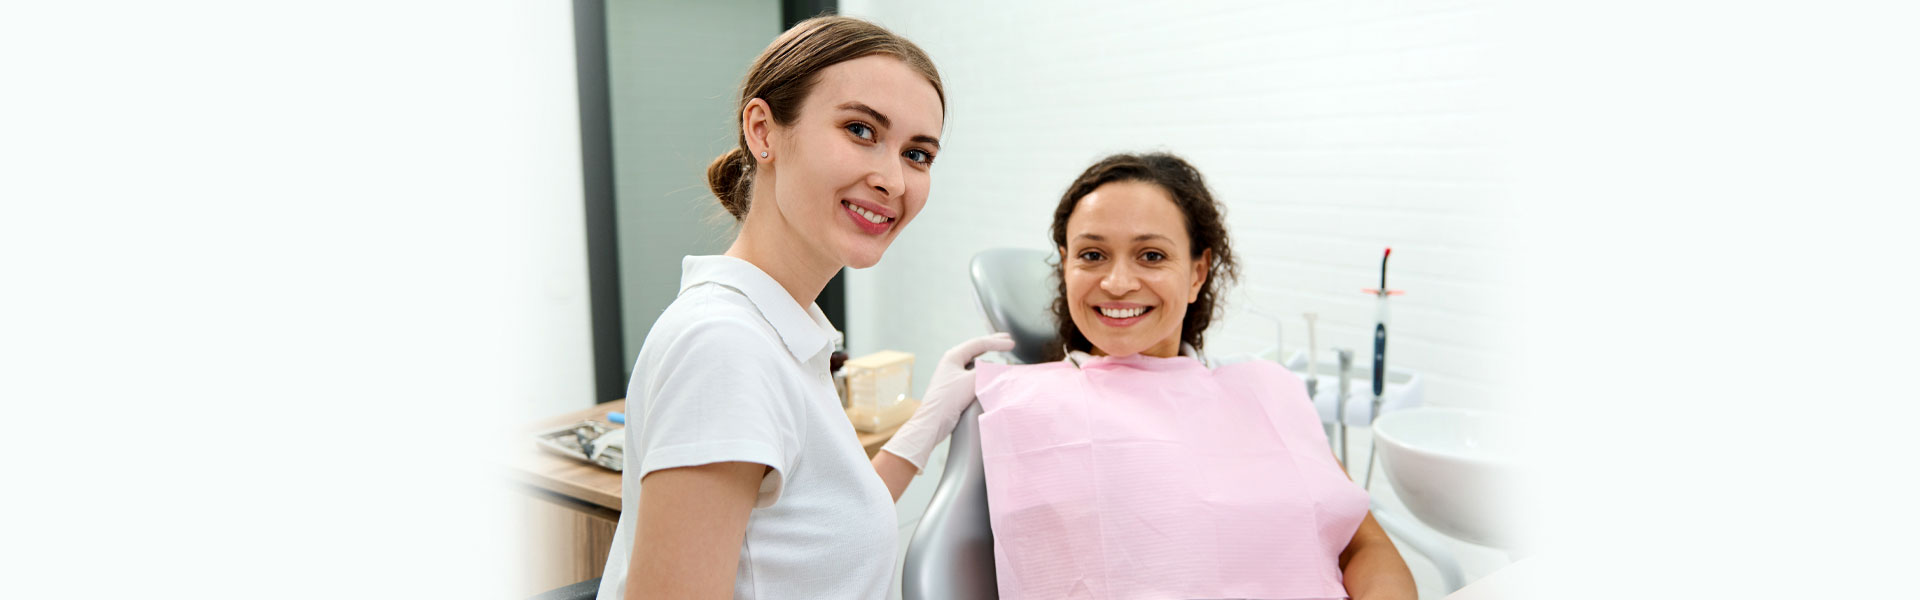 How Often Should You Go for Dental Checkup?